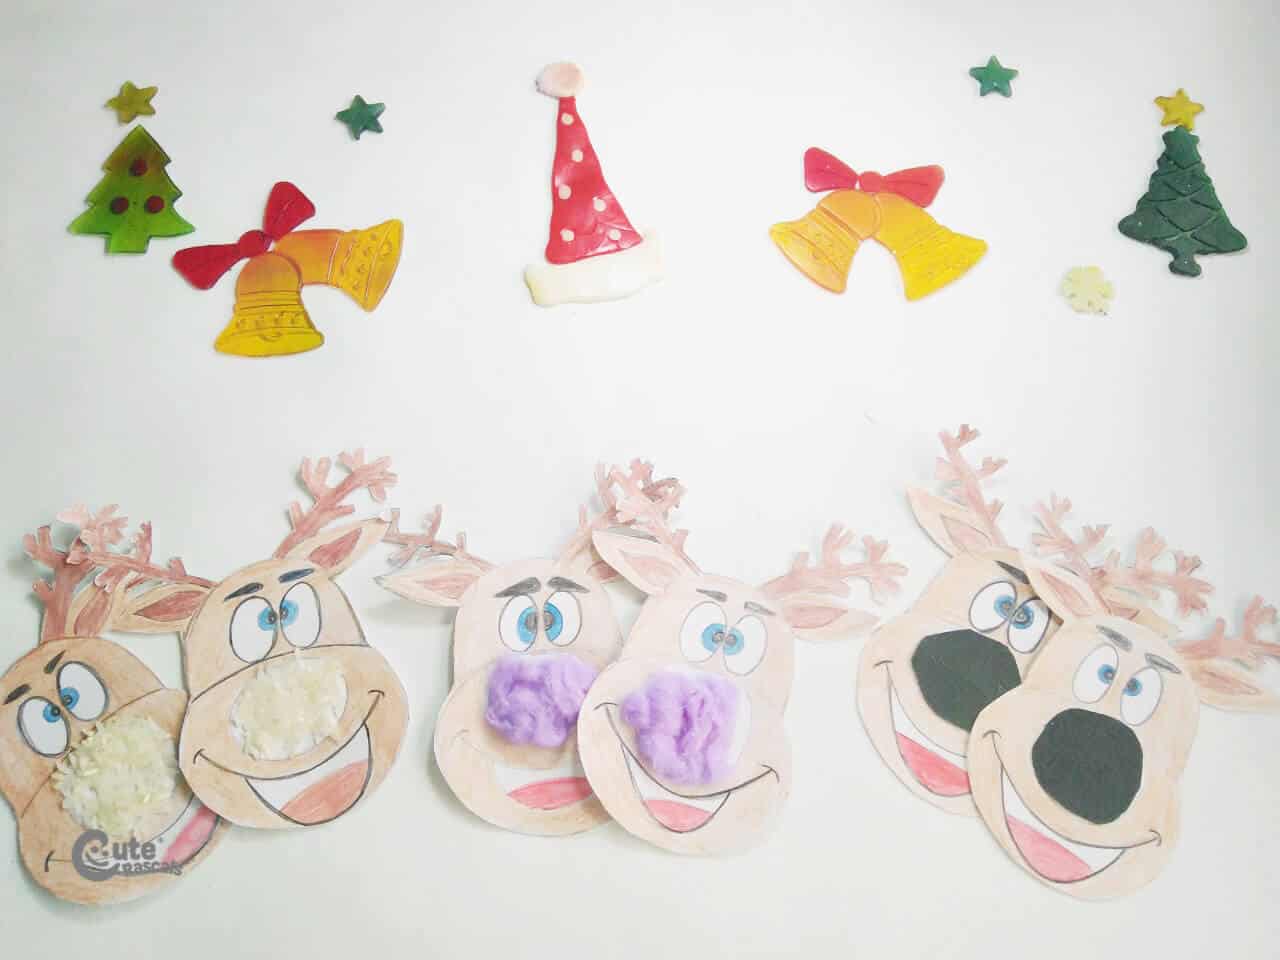 Reindeer craft faces with textures